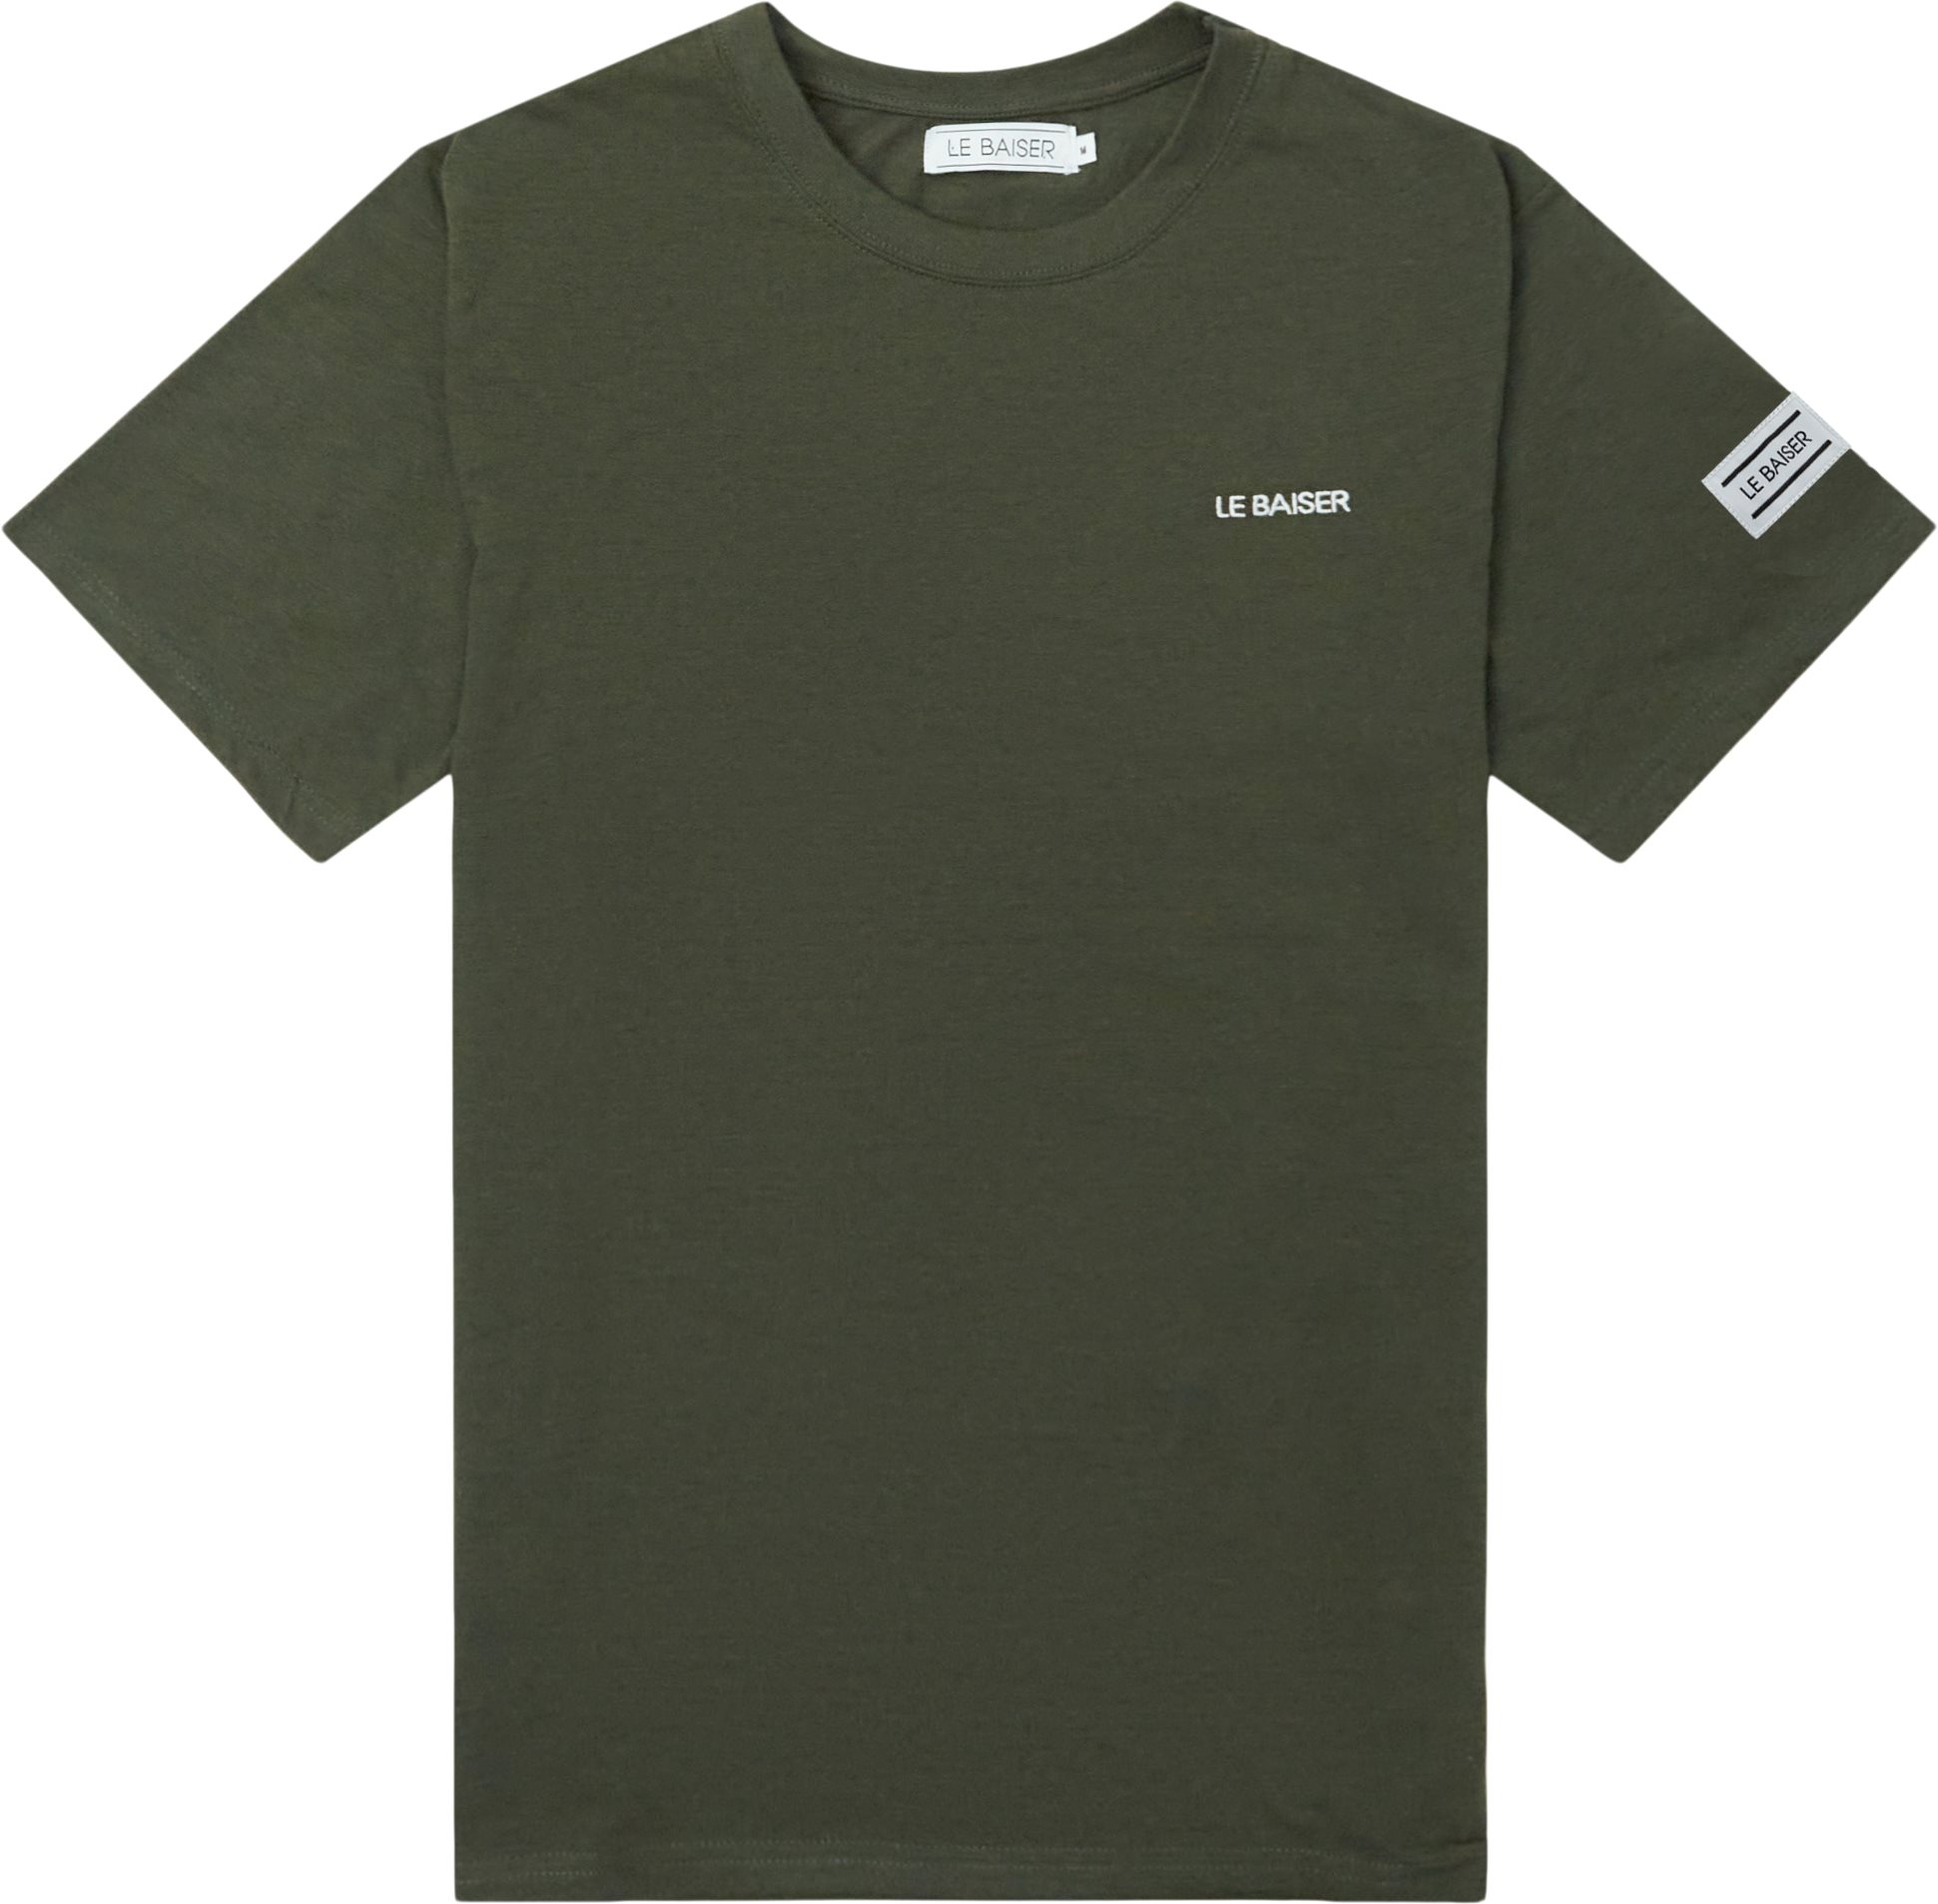 Bourg Tee - T-shirts - Regular fit - Armé